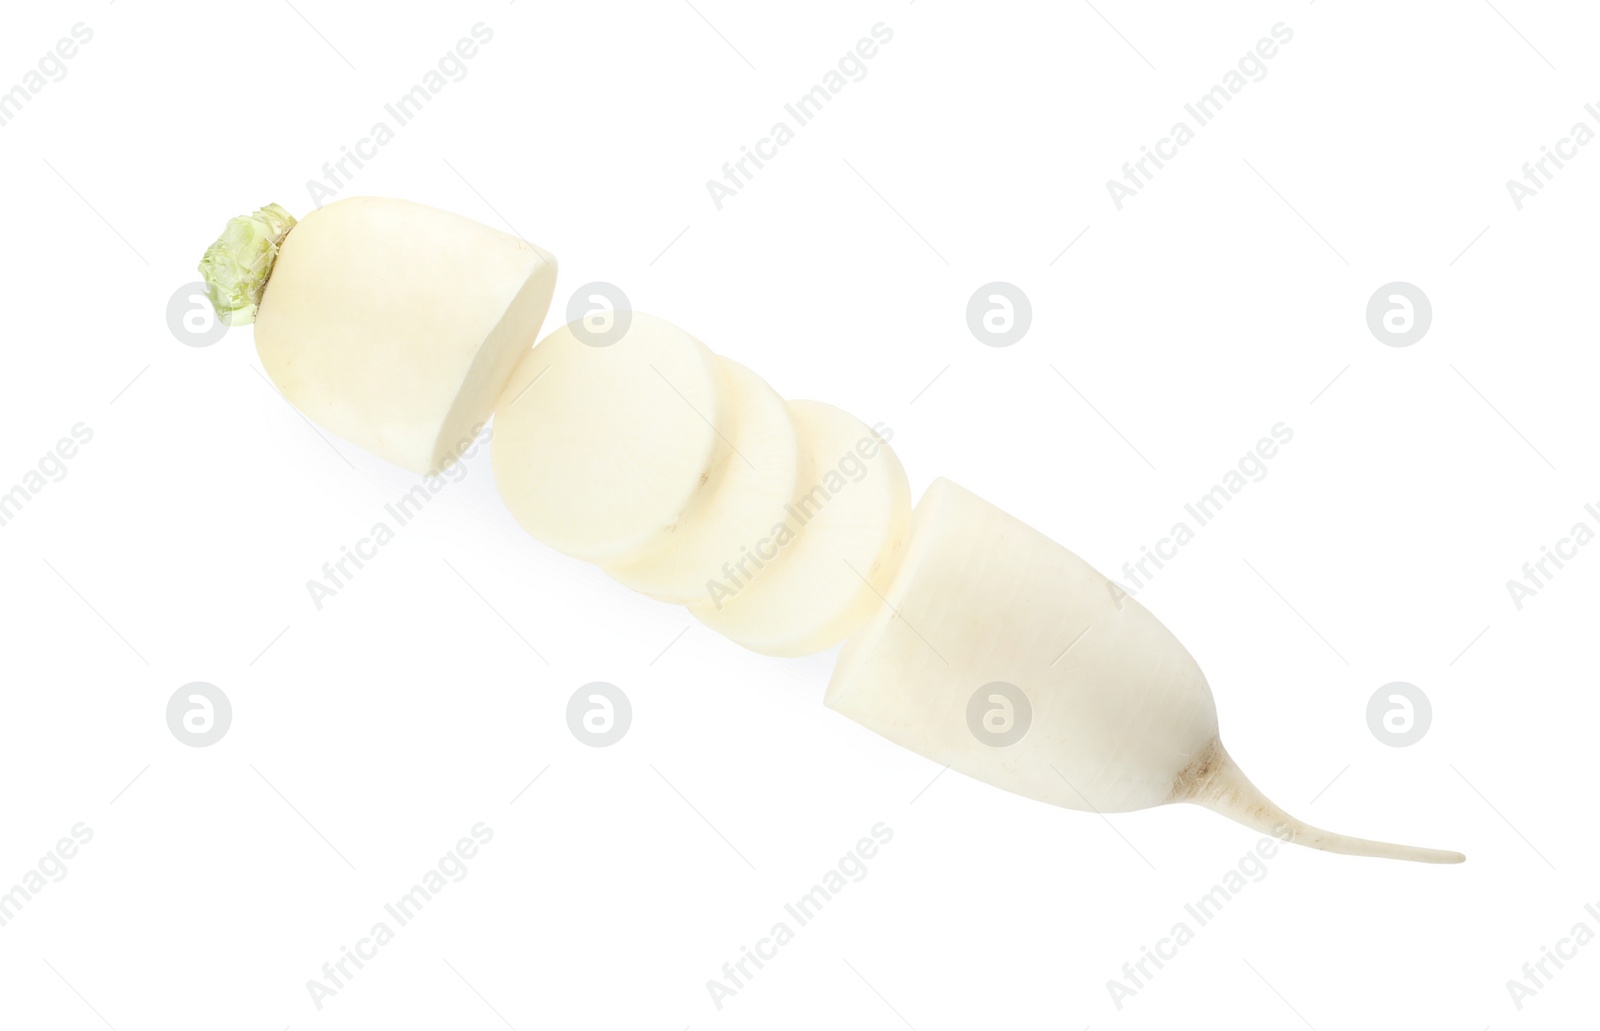 Photo of Sliced fresh ripe turnip on white background, top view